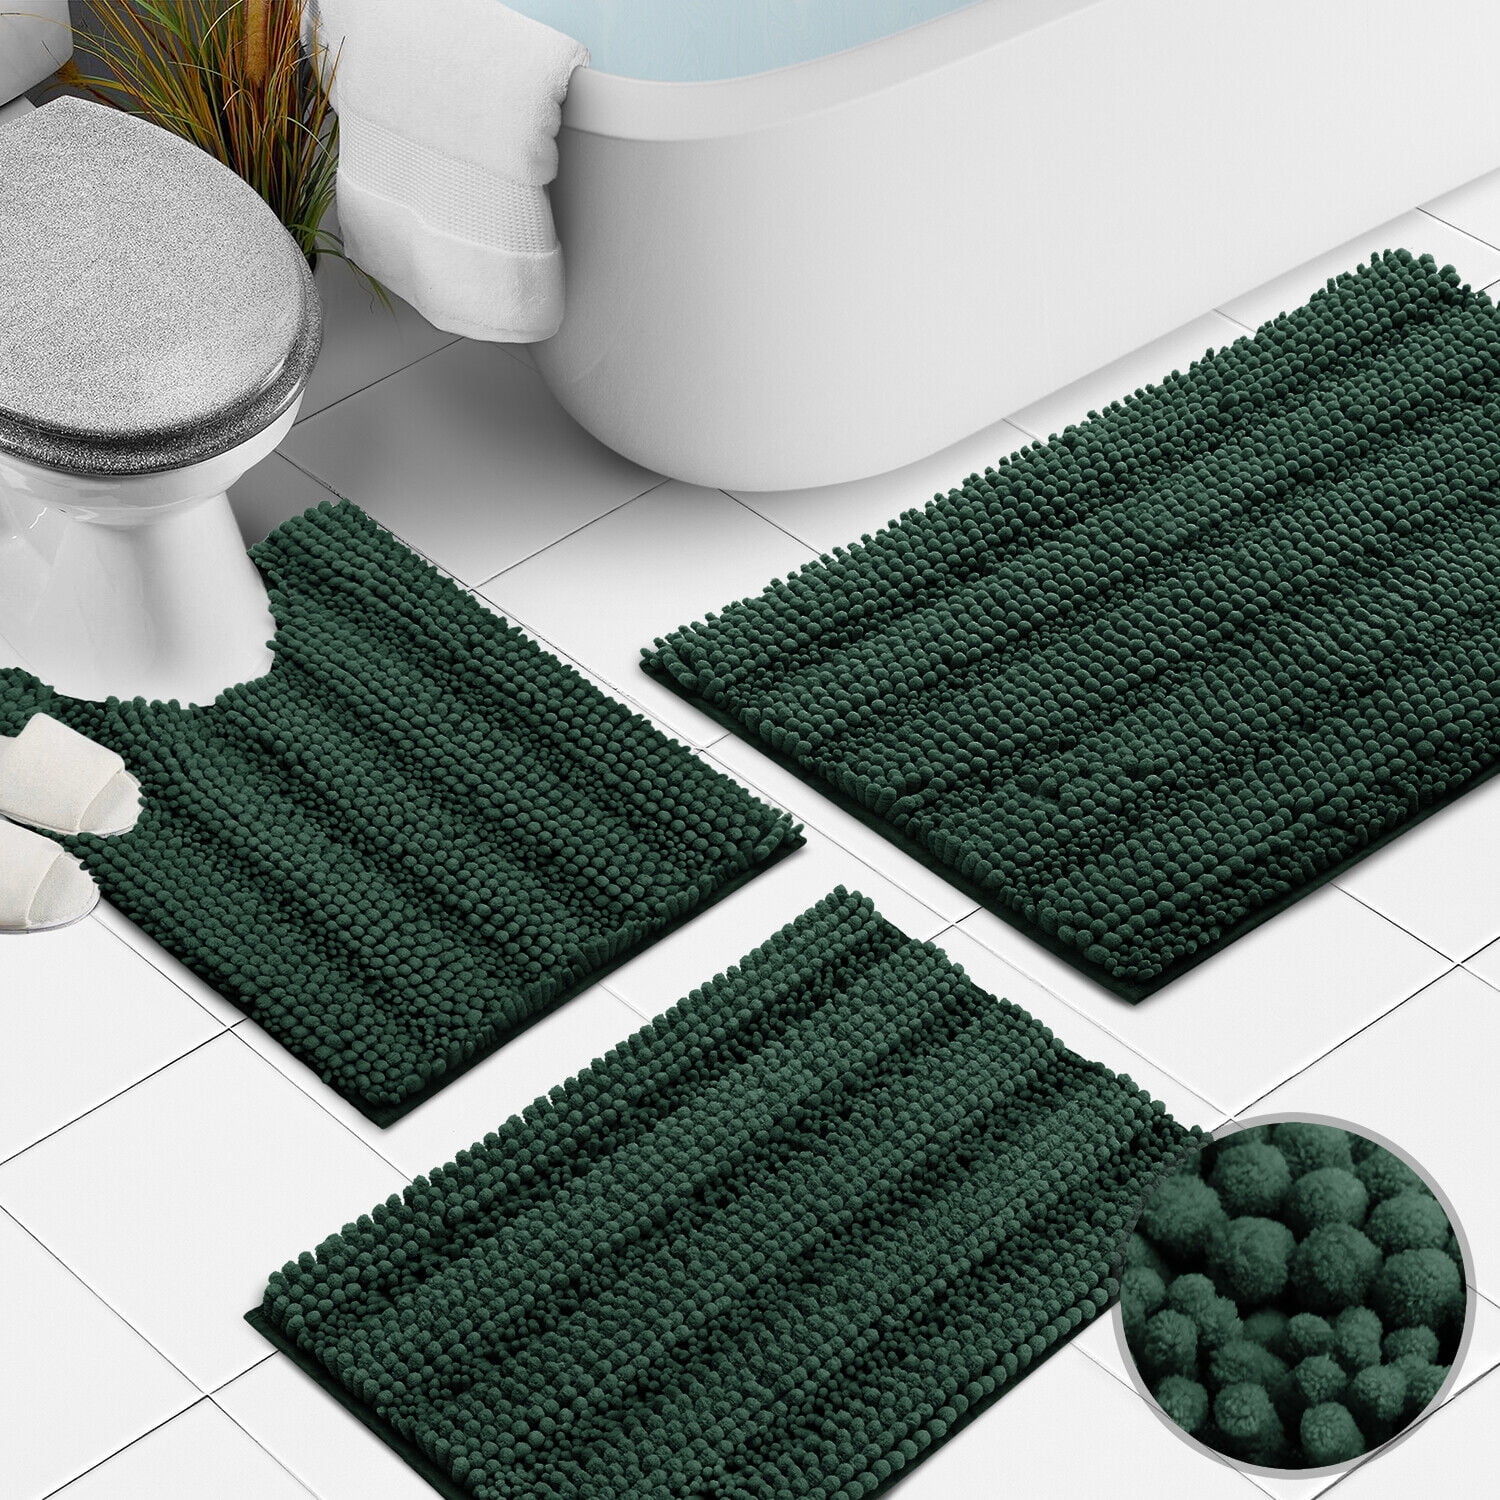 Kmson 3 Piece Bathroom Rugs Bath Mat Set - Soft Plush Chenille Shower Mats  for Bathroom Durable Bath Rug with Rubber Backing, Ultra Absorbent Bath